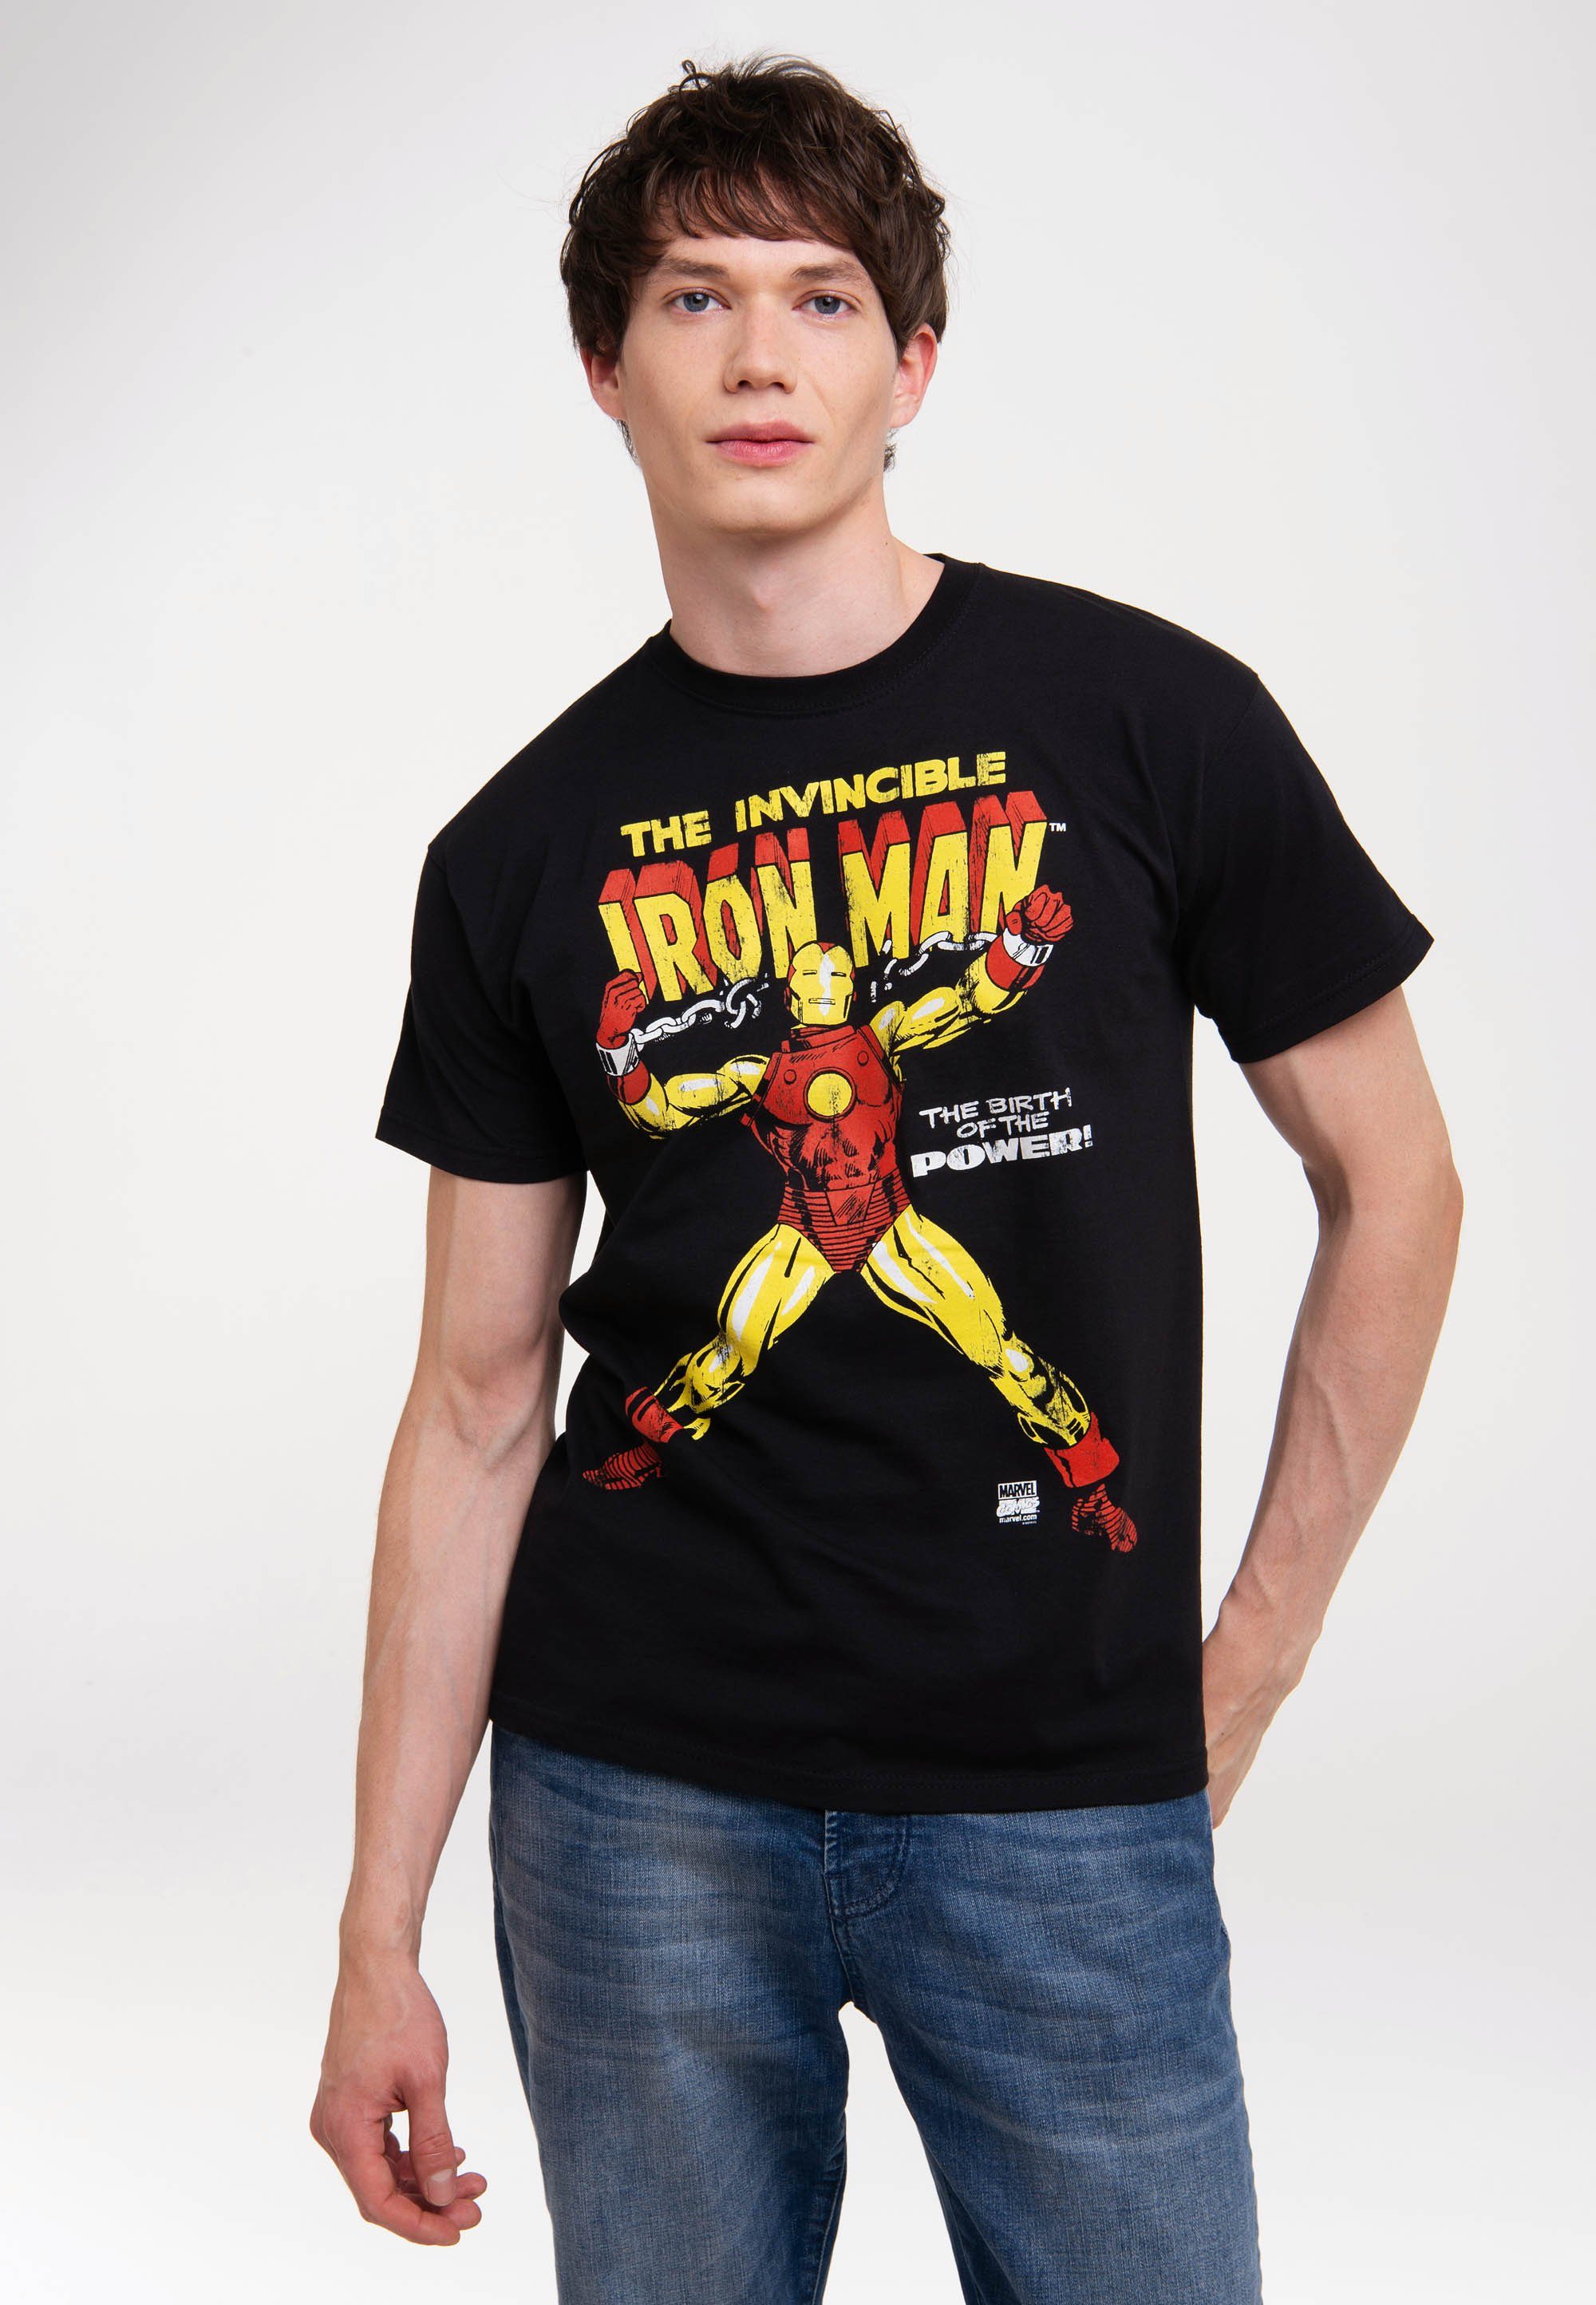 - Iron The LOGOSHIRT Power Print Of mit lizenziertem Birth Man T-Shirt The